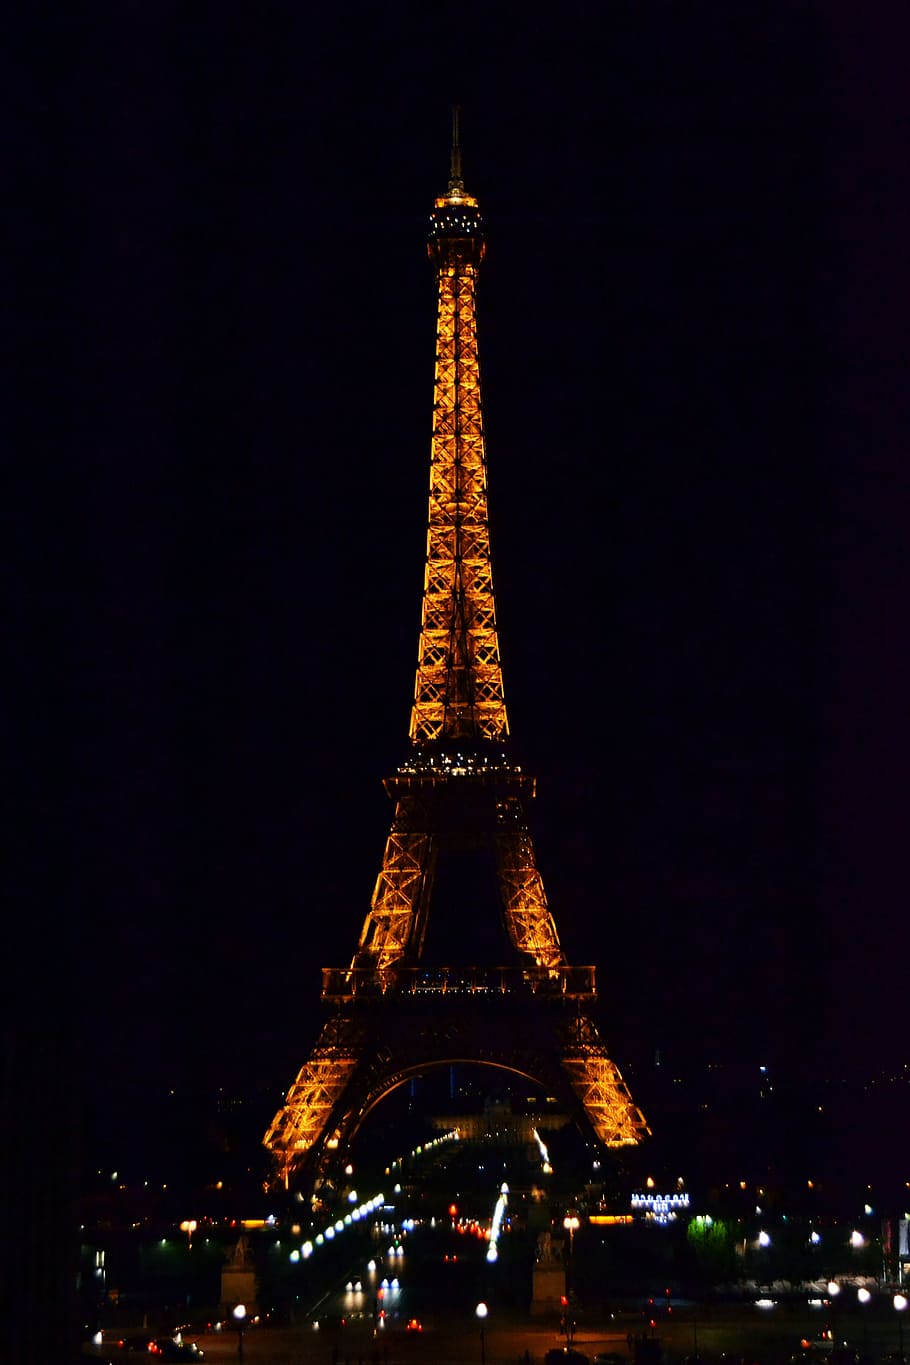 the eiffel tower, night, lighting, paris, france, eiffel Tower, paris - France, famous Place, tower, architecture